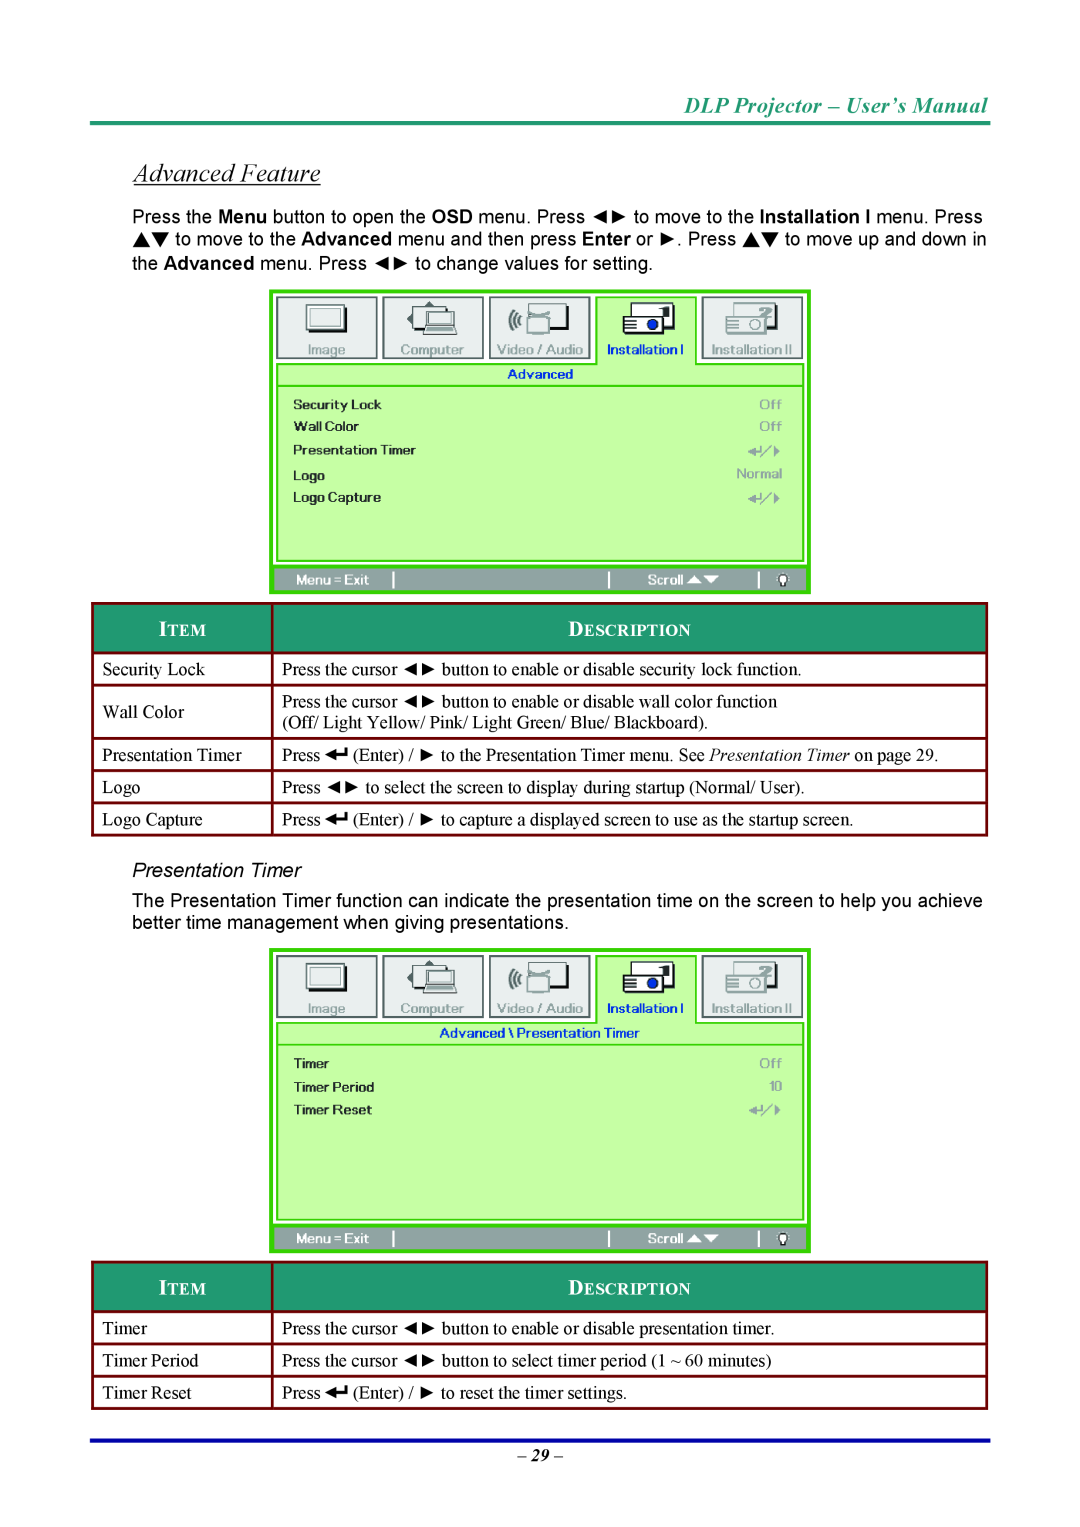 Vivitek D7 user manual Advanced Feature, DLP Projector - User’s Manual, Presentation Timer 